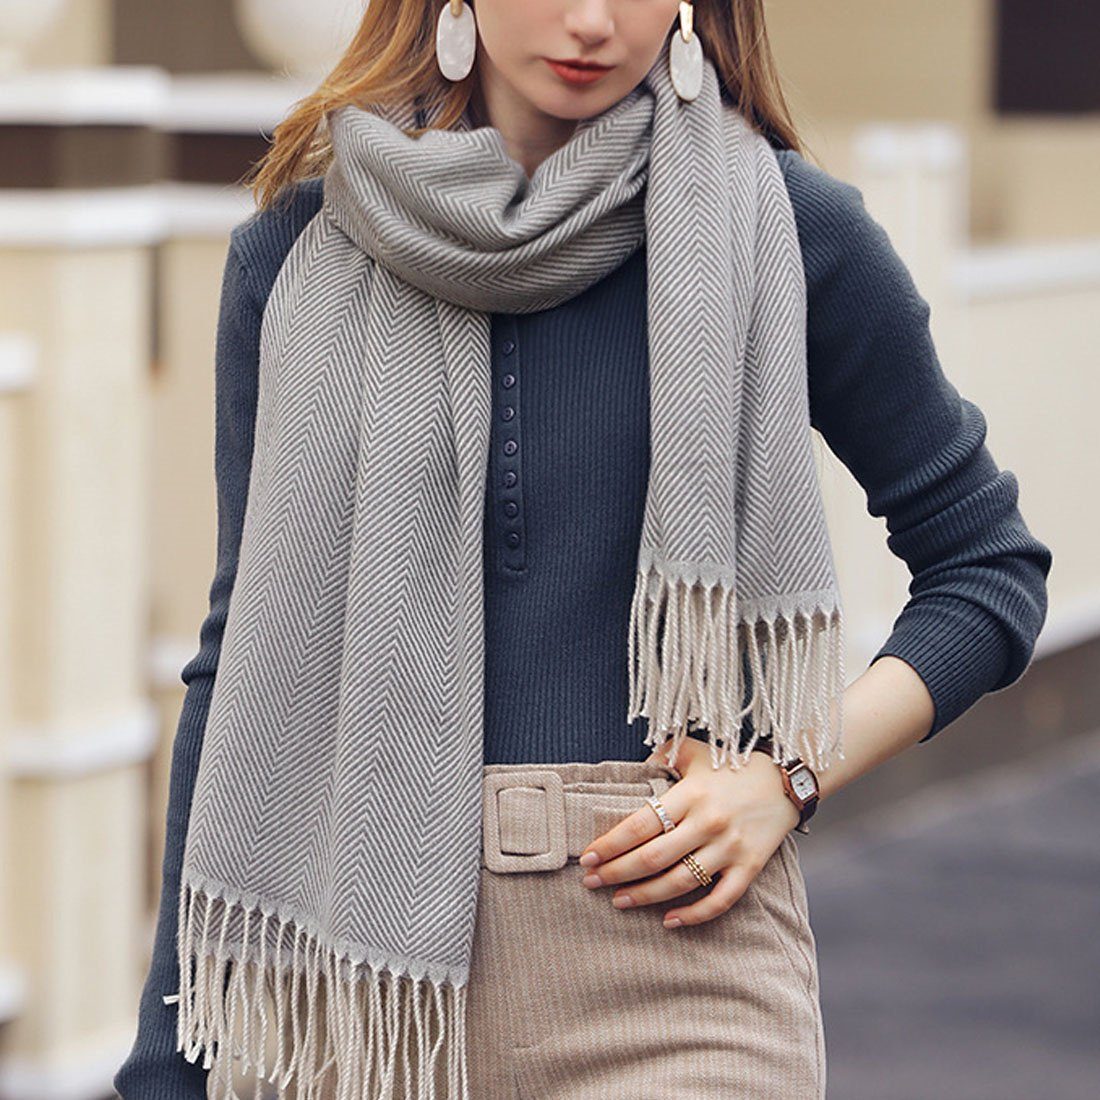 Modeschal Quaste, Schal dicker,warmer Grau Vintage-Look DÖRÖY im mit Damenschal Gestreifter